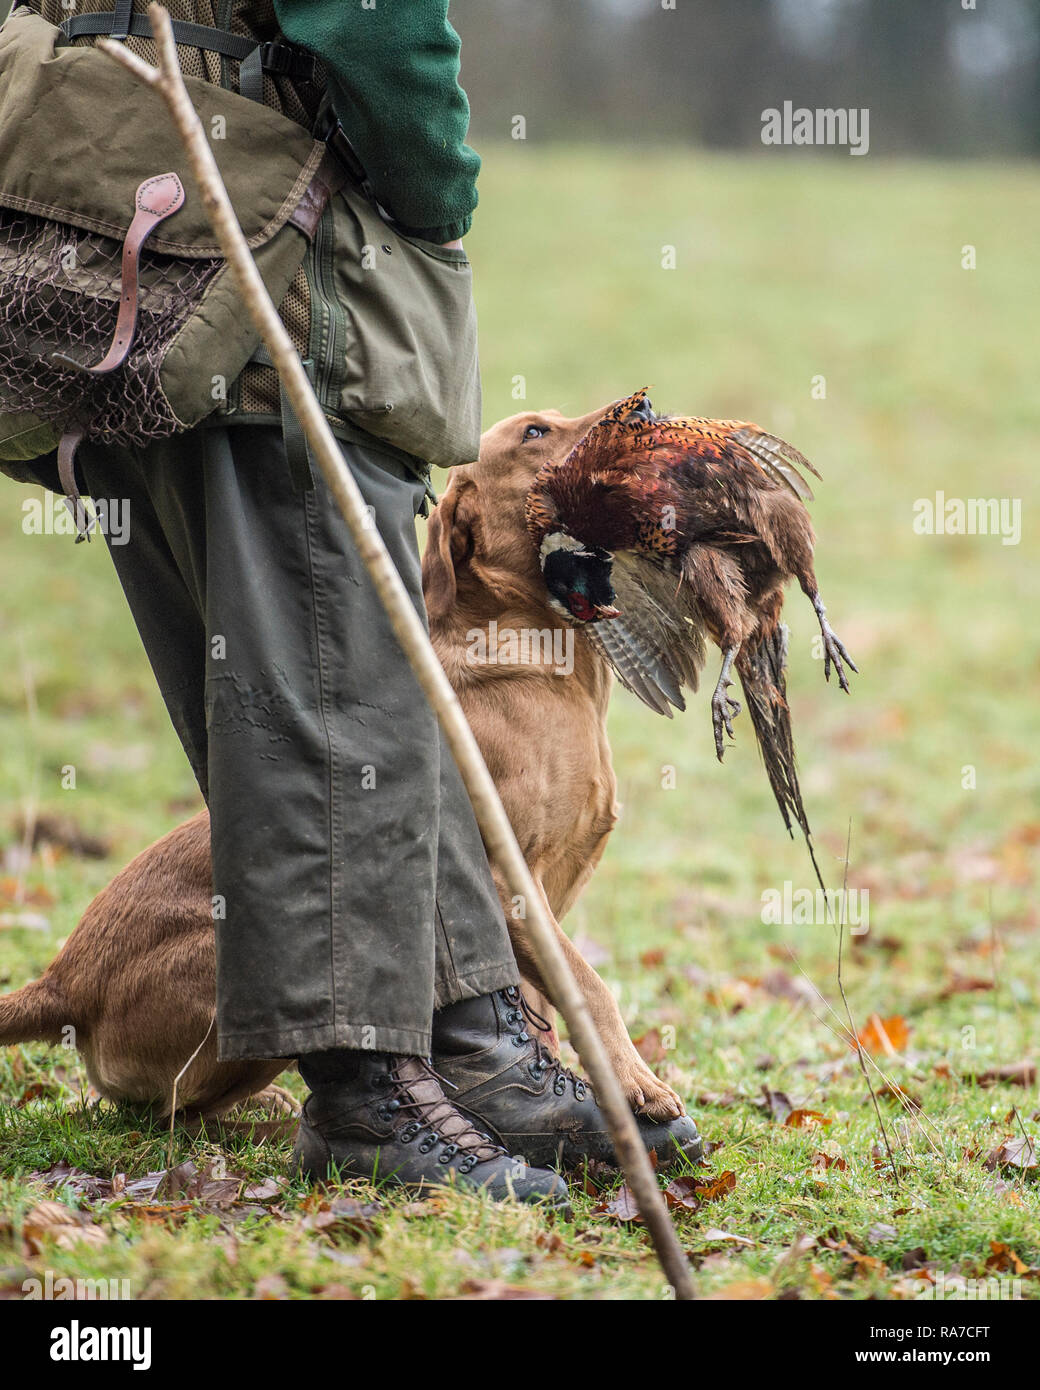 dog retrieving a pheasant on a shoot Stock Photo